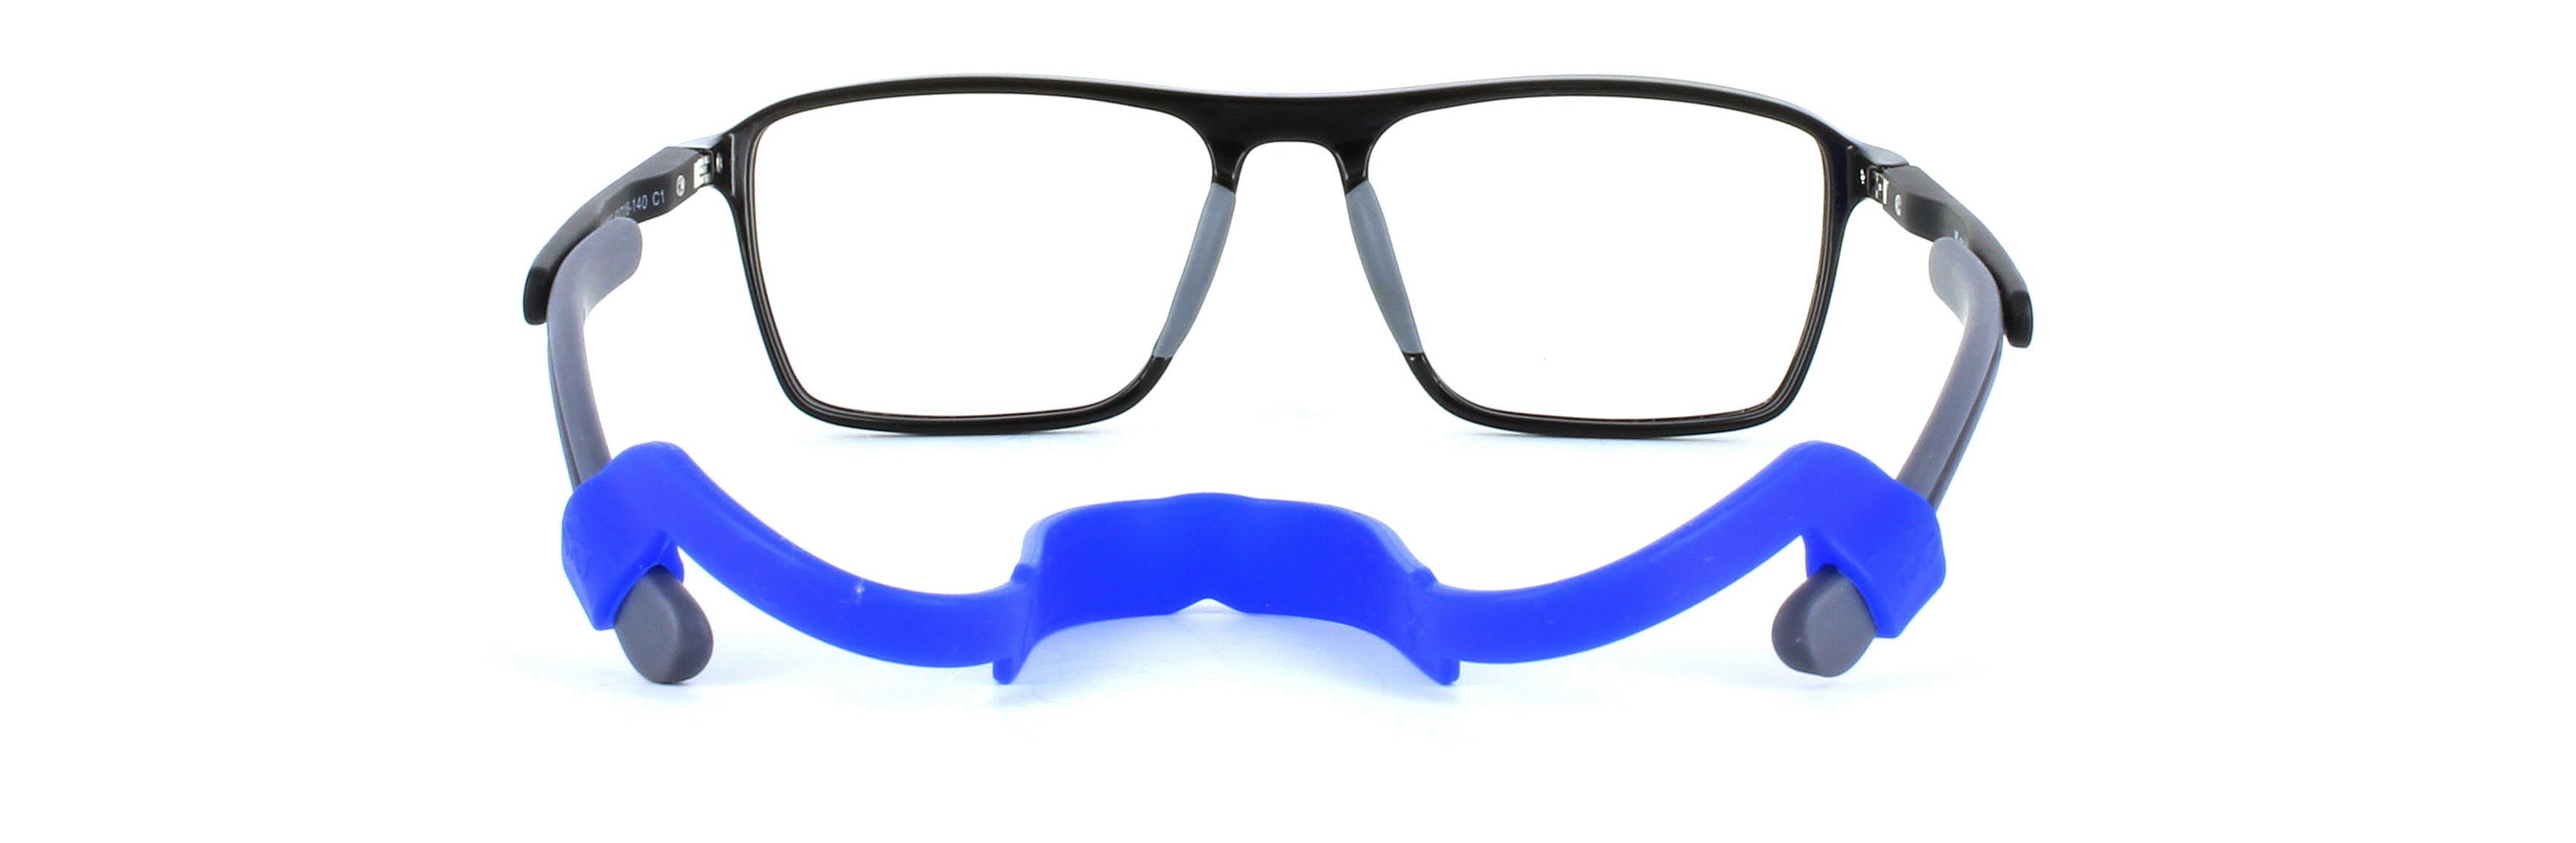 Ramble - unisex prescription sports glasses - black & grey - image view 3